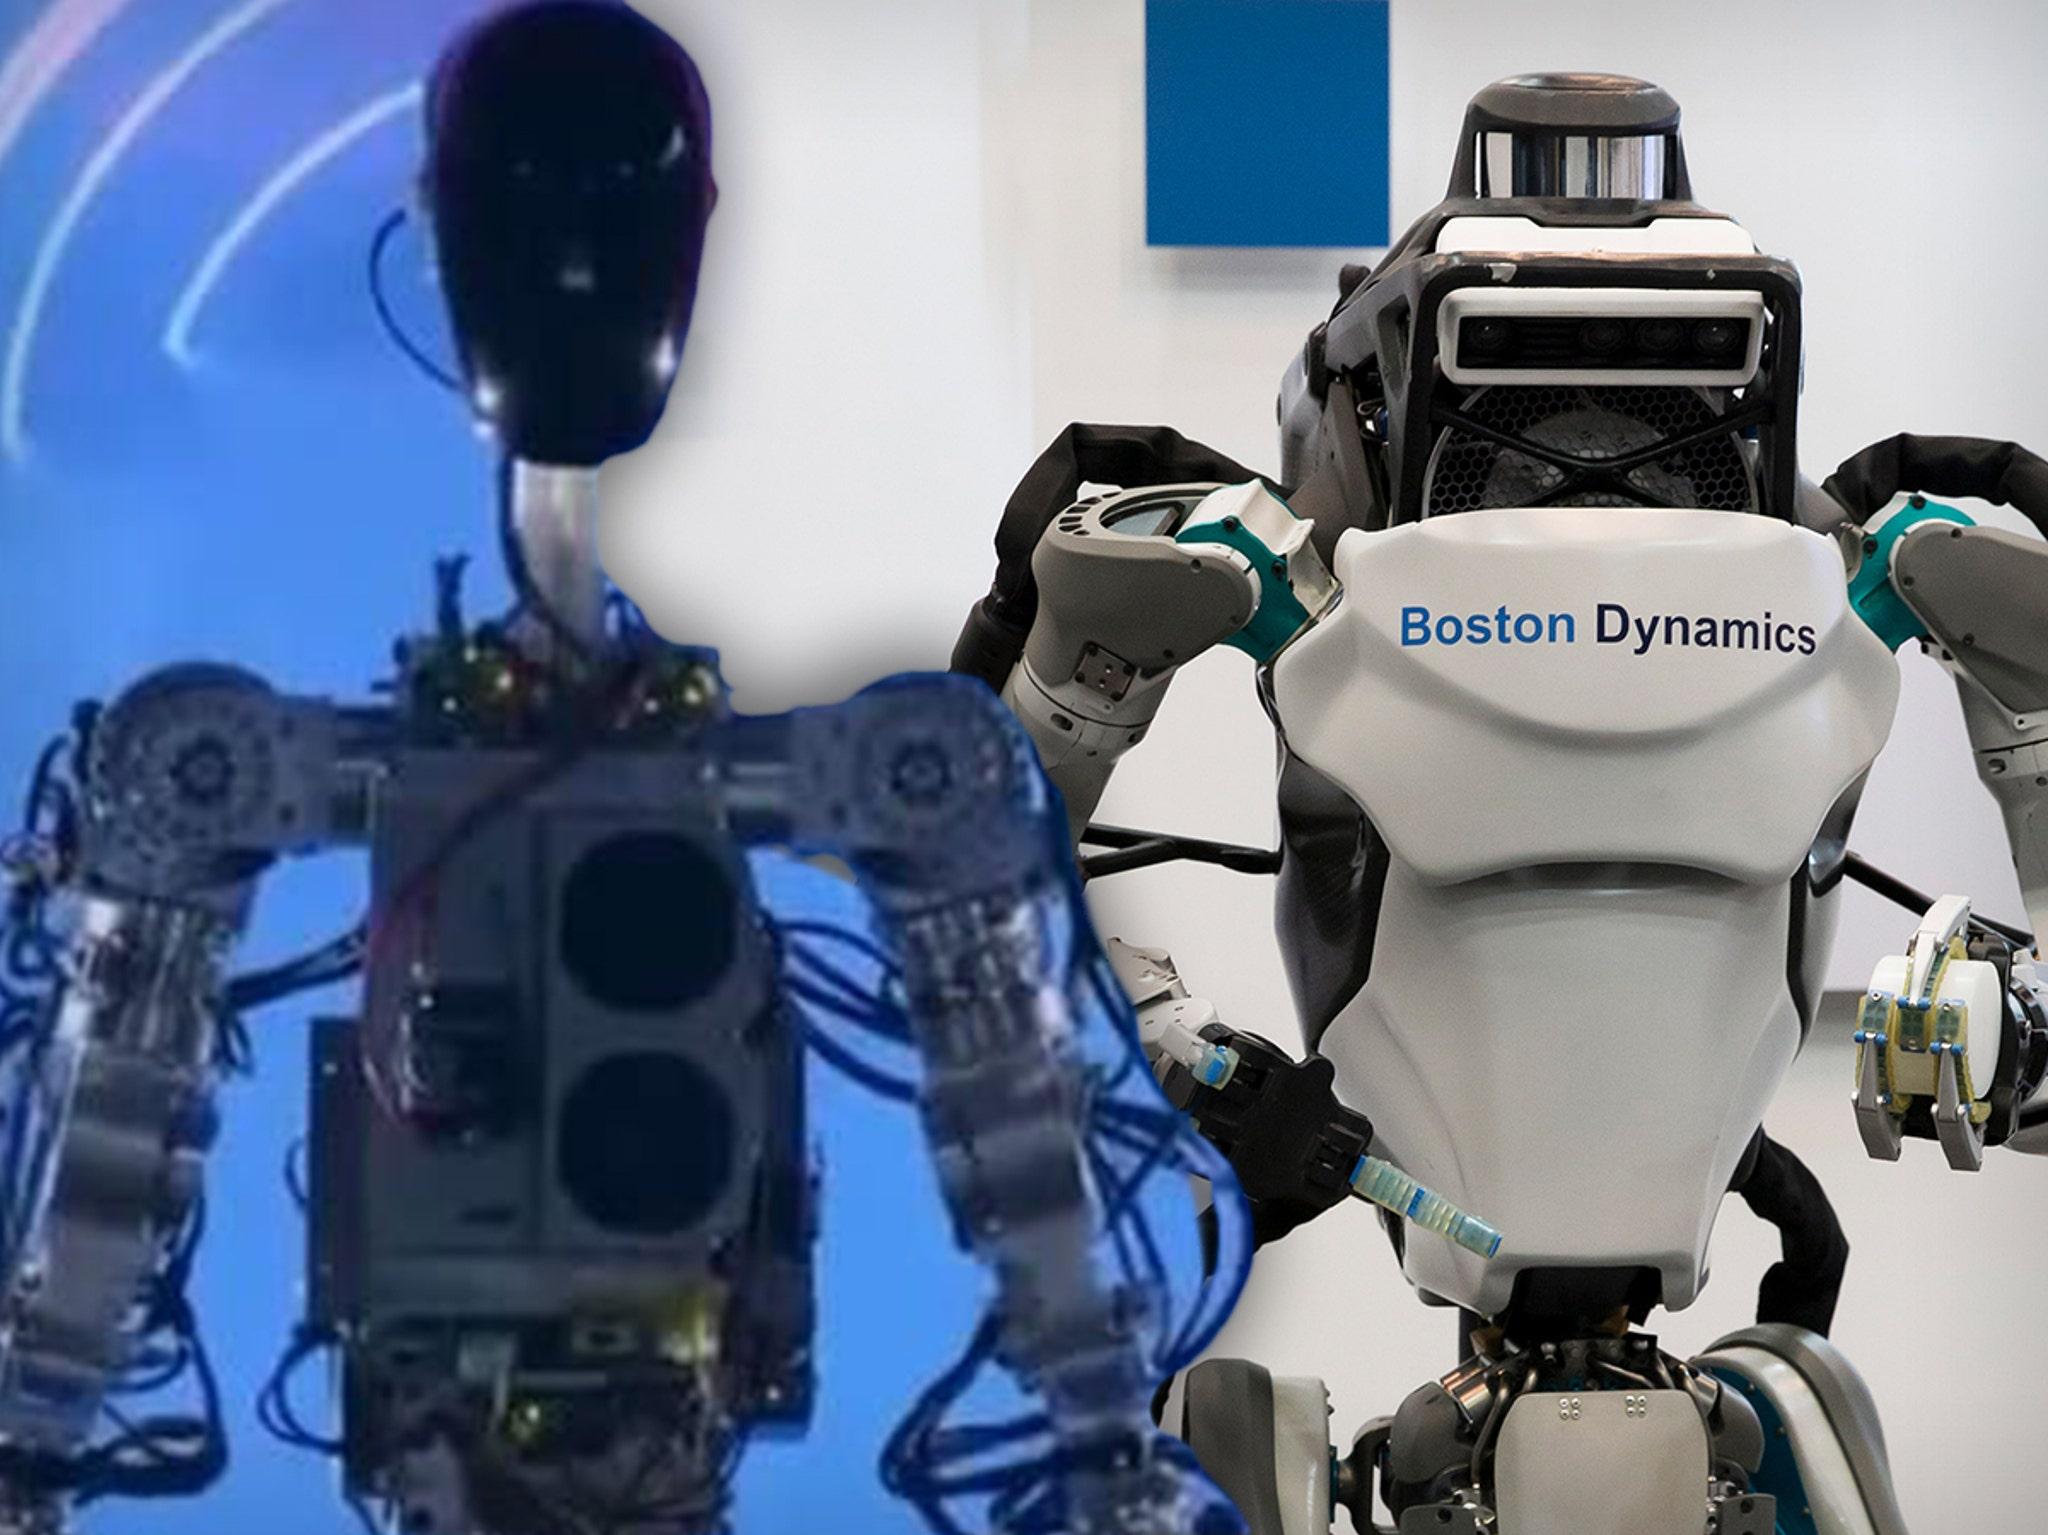 Tesla S Humanoid Robot Mocked Amid Parisons With Boston Dynamics